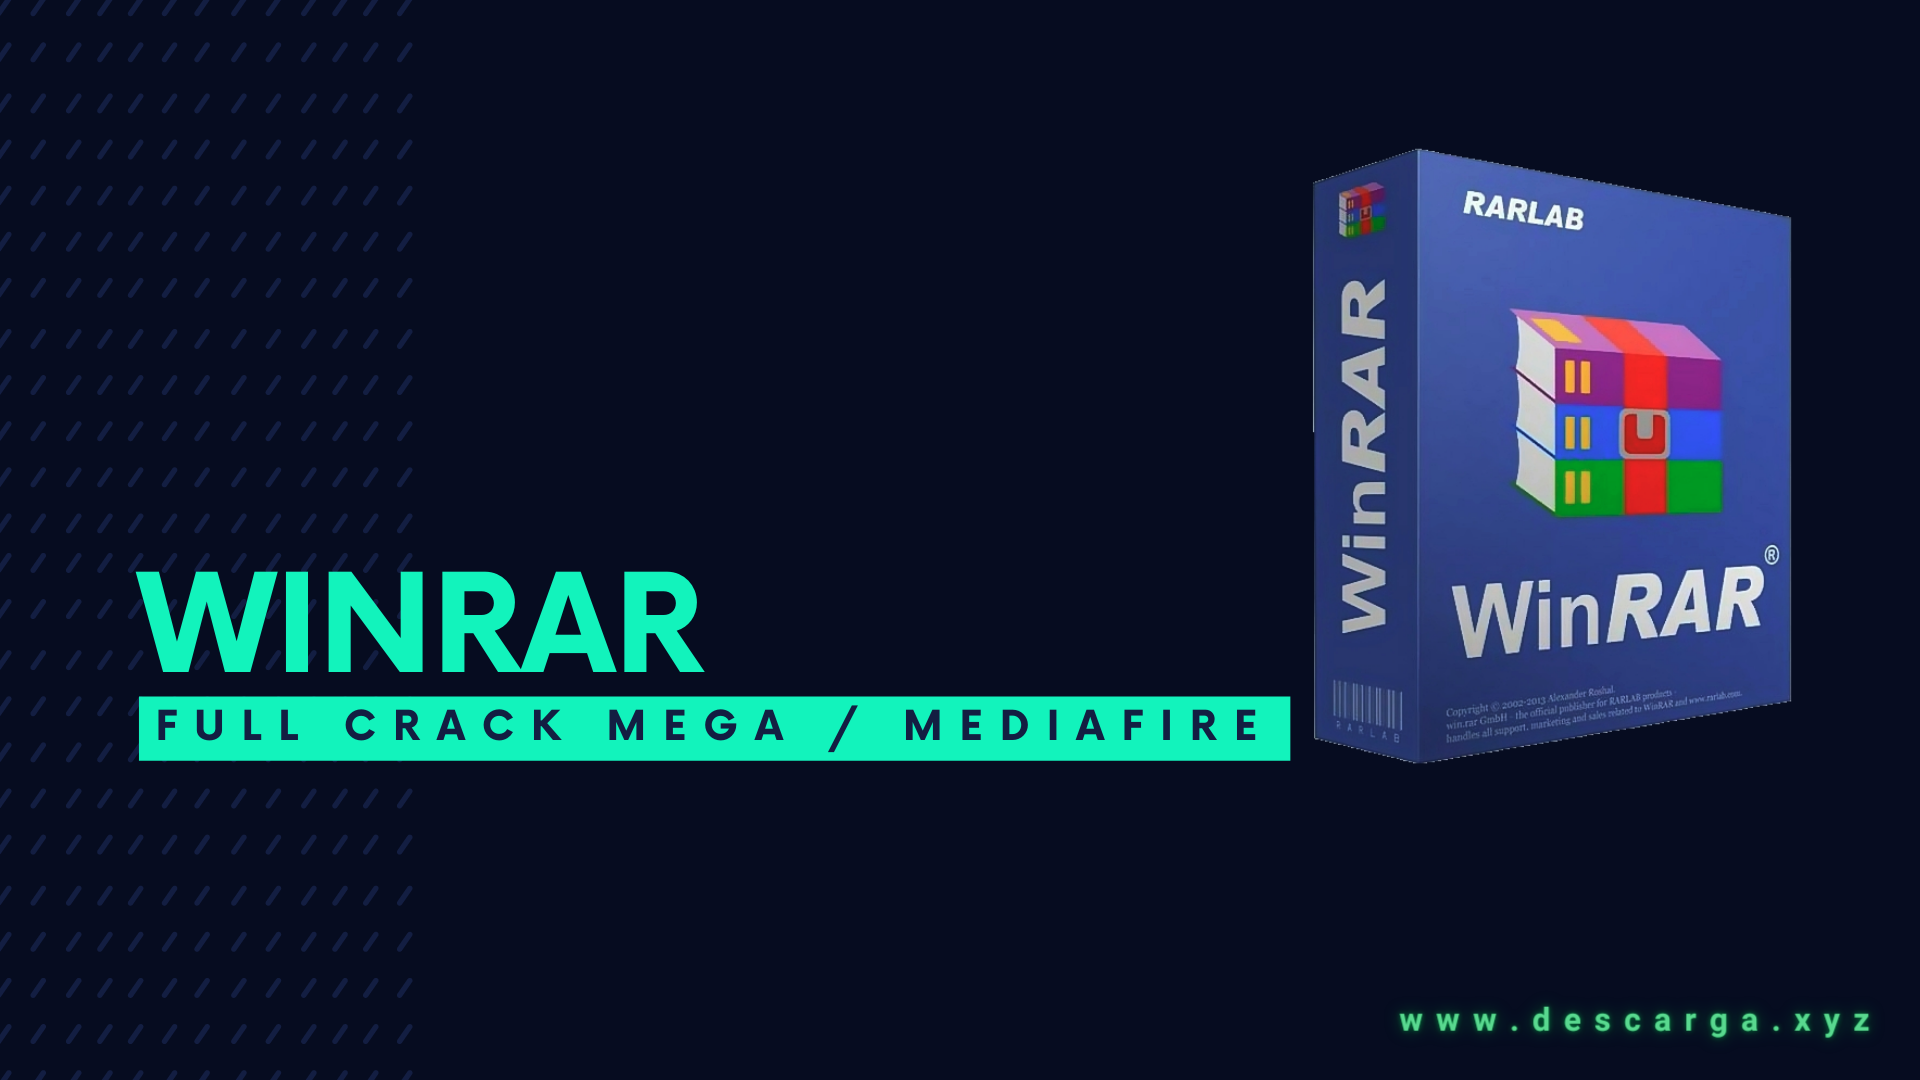 Winrar full mega Full descarga Crack download, free, gratis, serial, keygen, licencia, patch, activado, activate, free, mega, mediafire